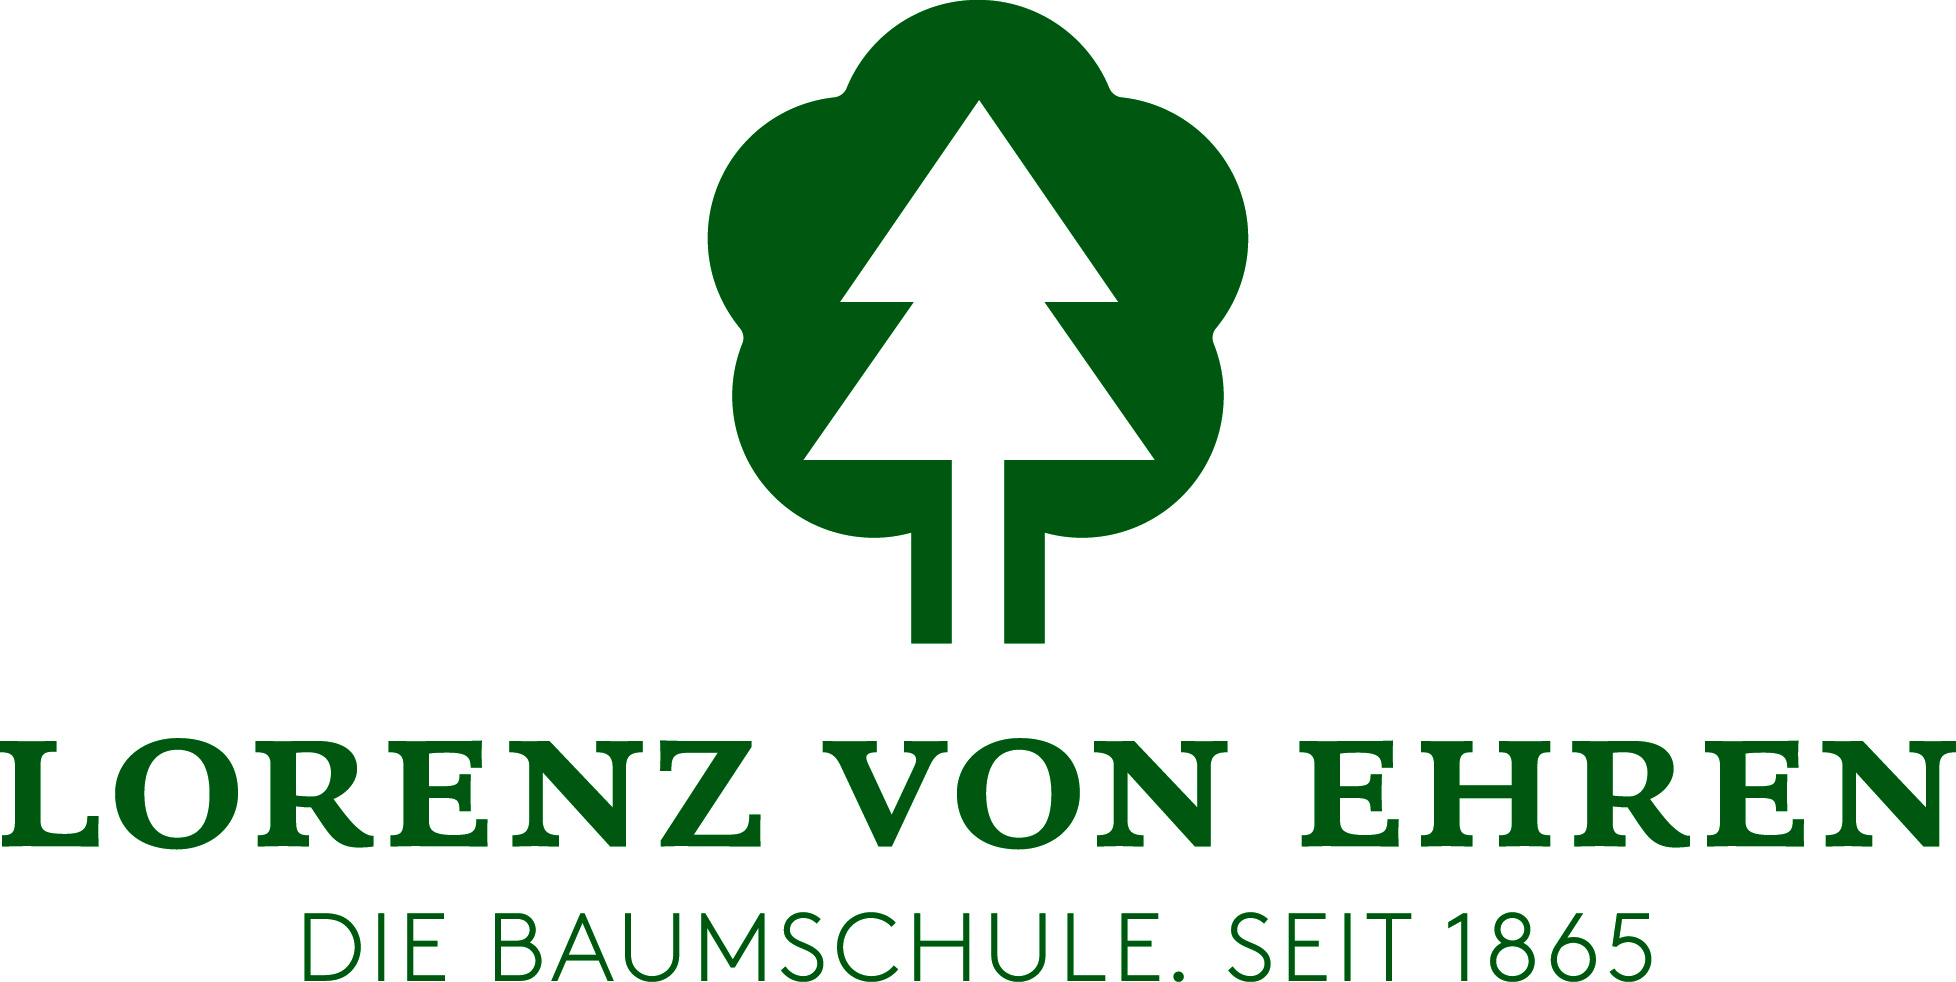 LvE Logo 2014 300dpi green